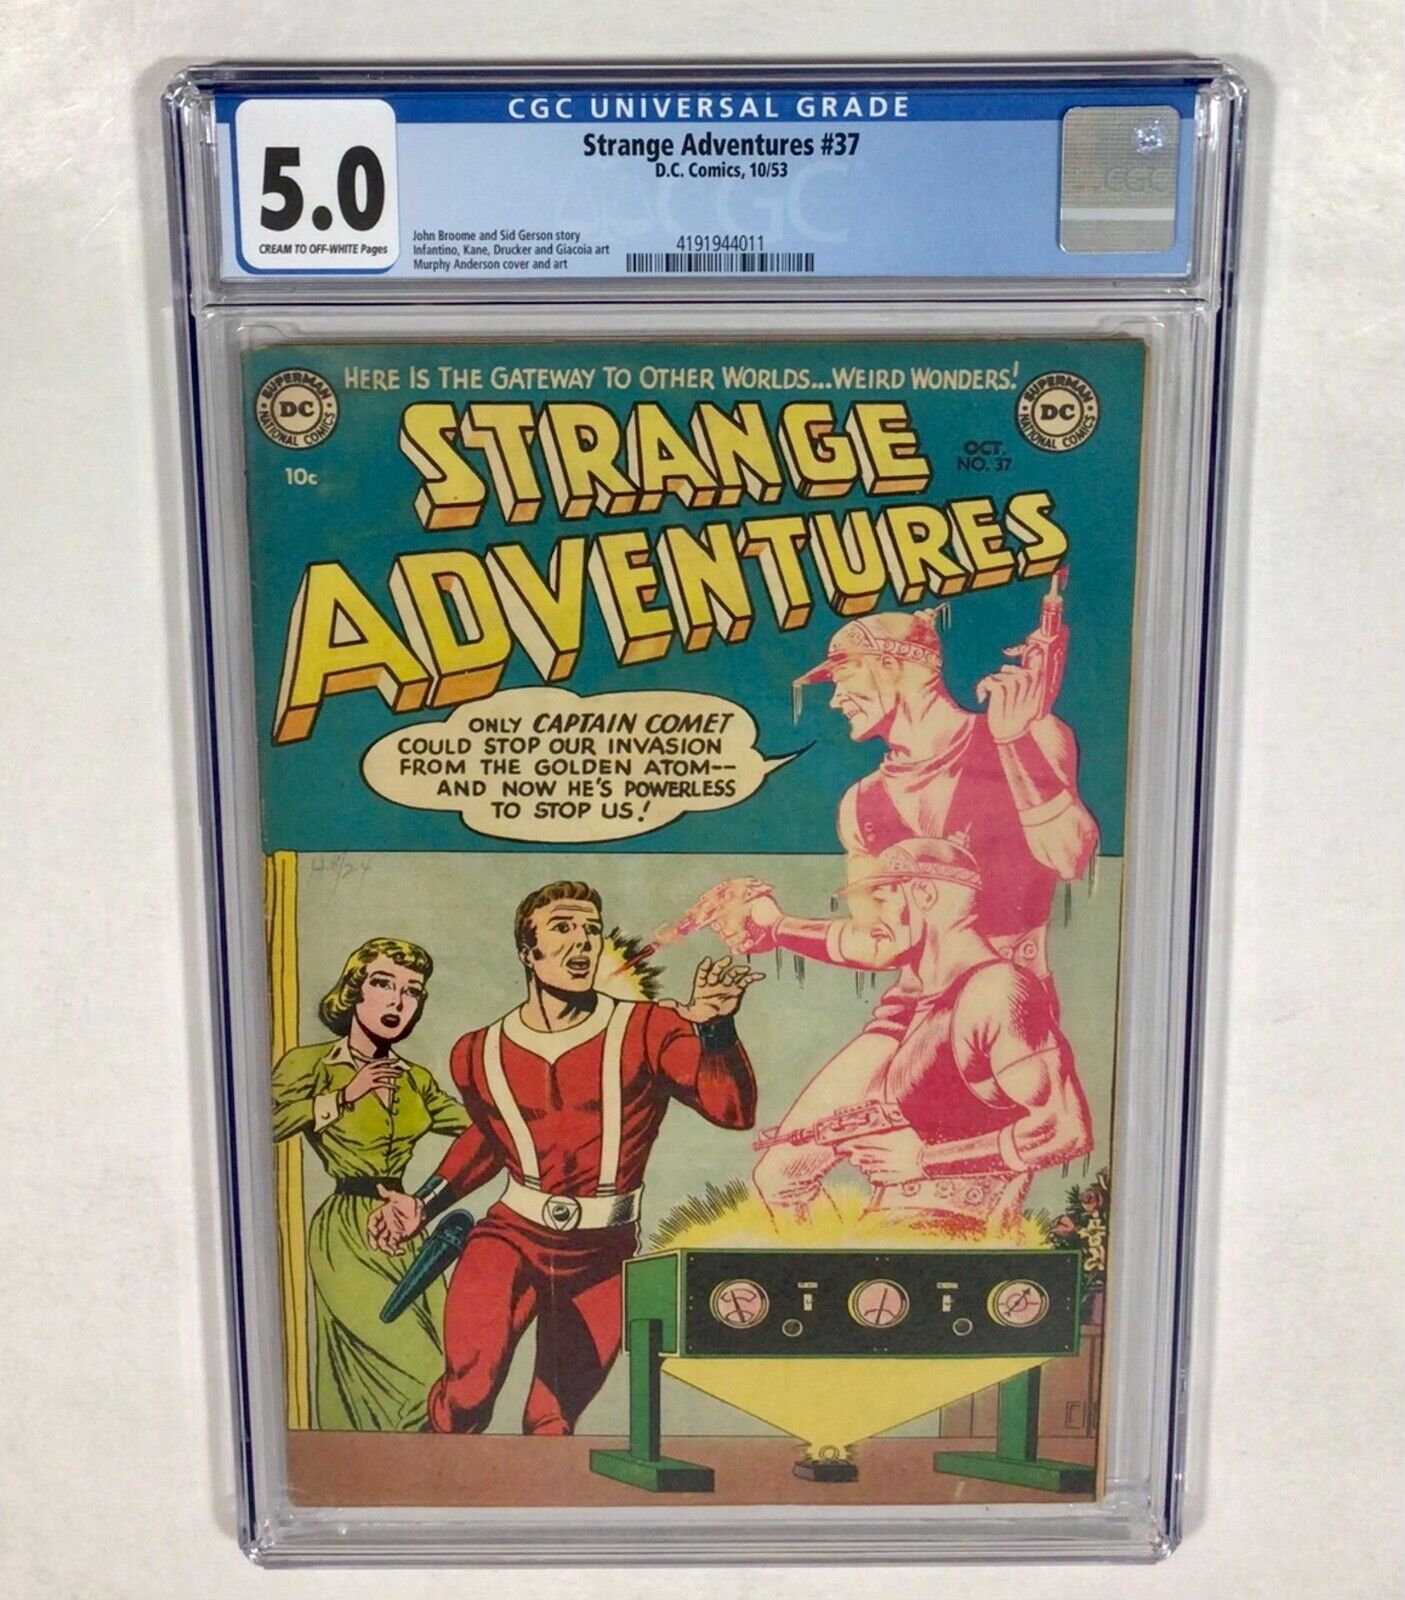 Strange Adventures #37 CGC 5.0 (16 on census, Murphy Anderson cover/art) 1953 DC